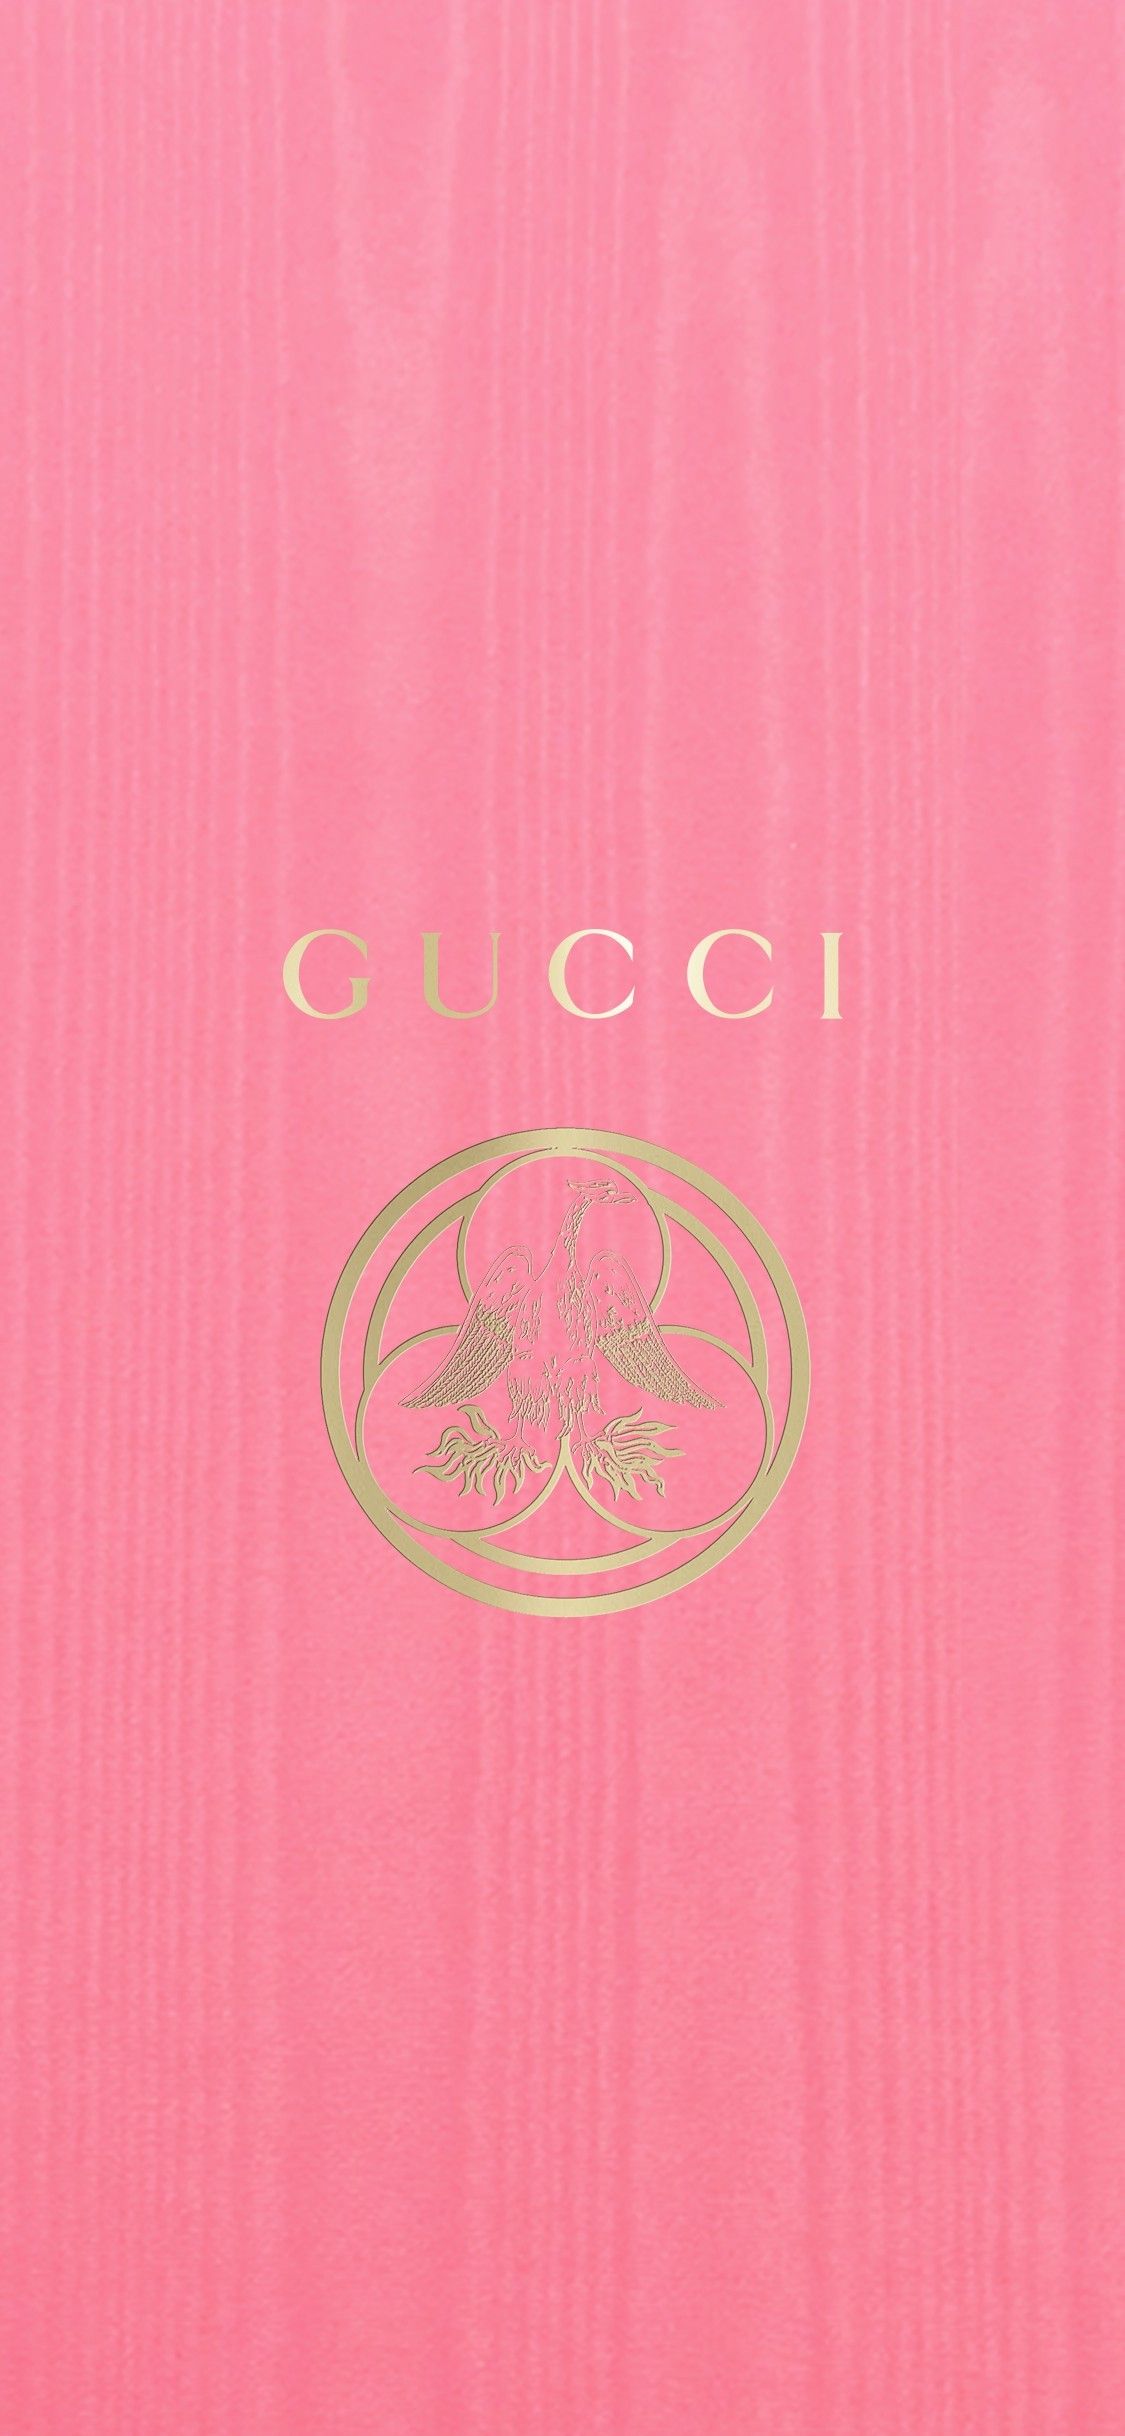 Gucci Wallpaper. Gucci ace sneakers, Dapper dan, Gucci kids